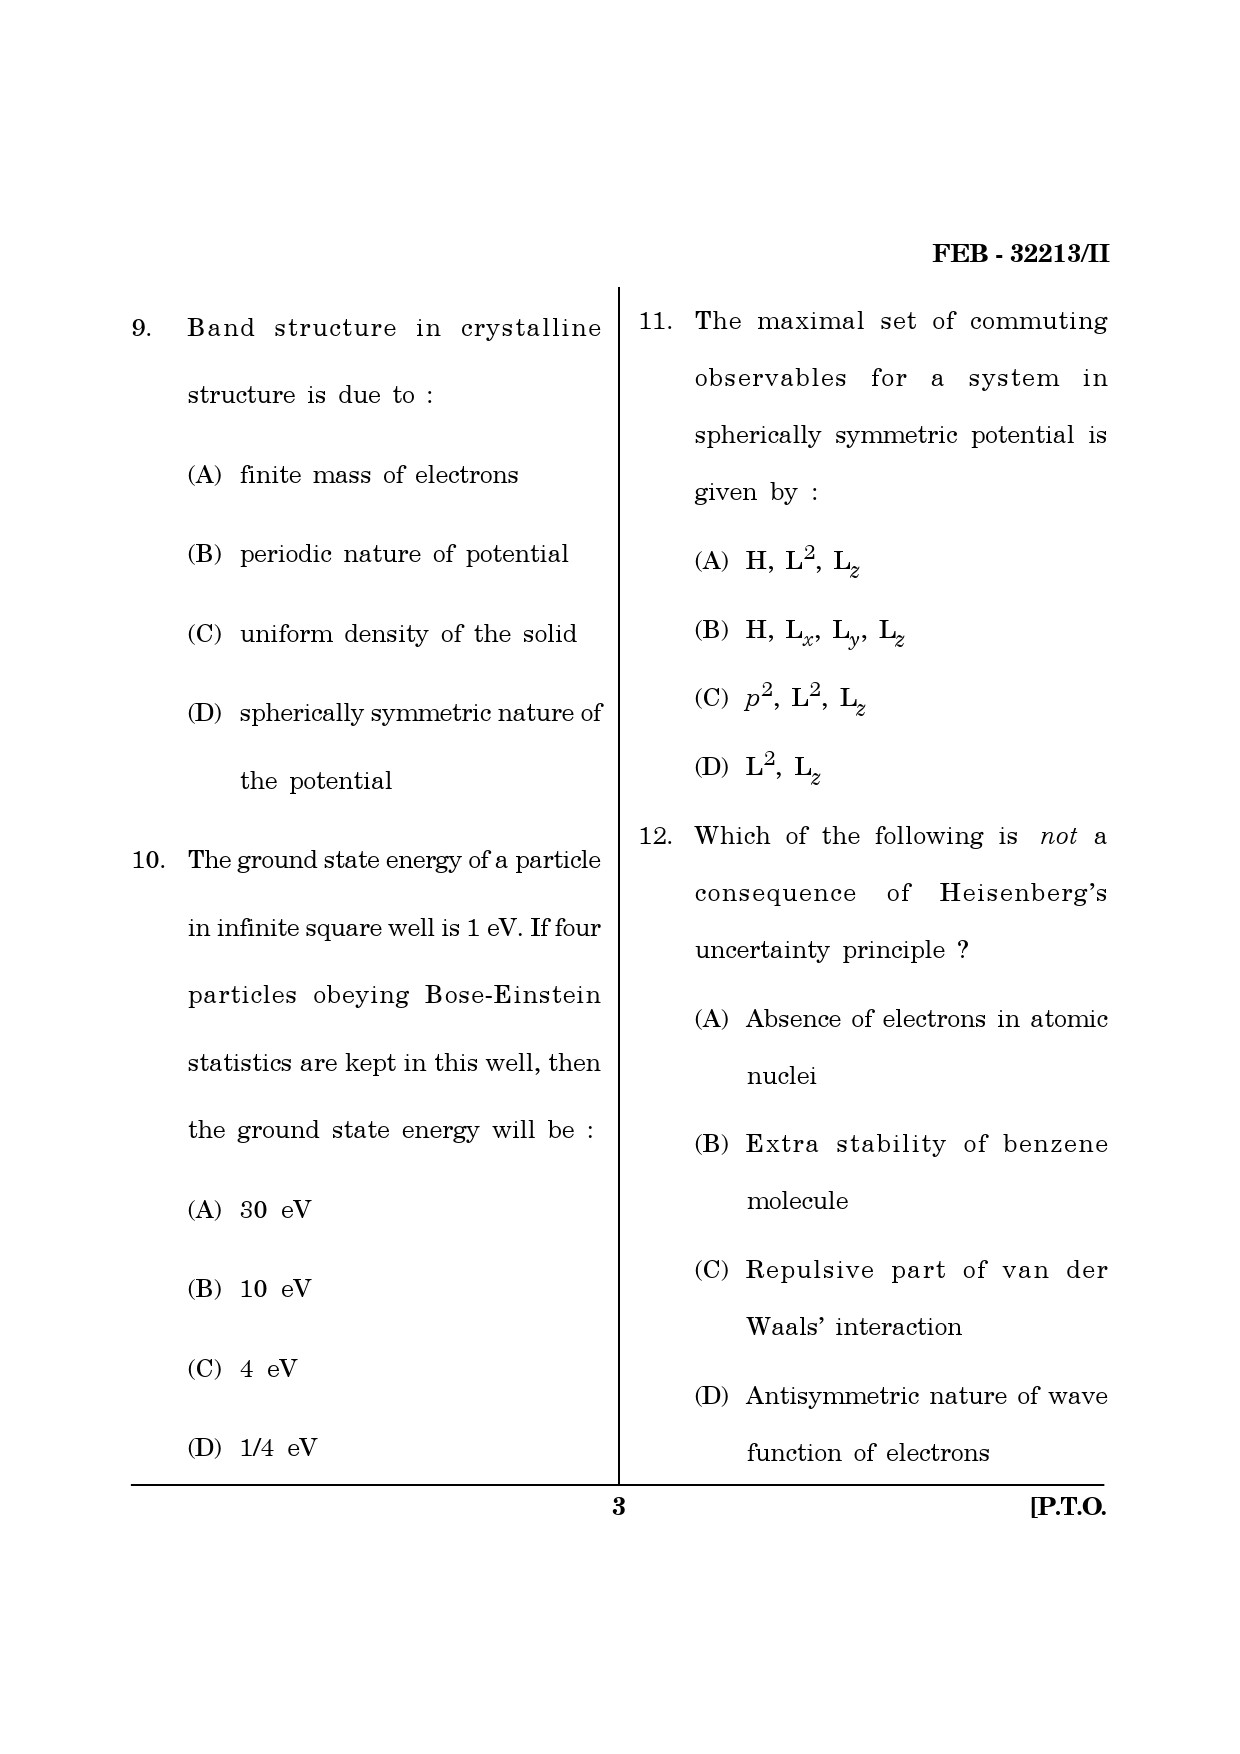 Maharashtra SET Physics Question Paper II February 2013 3